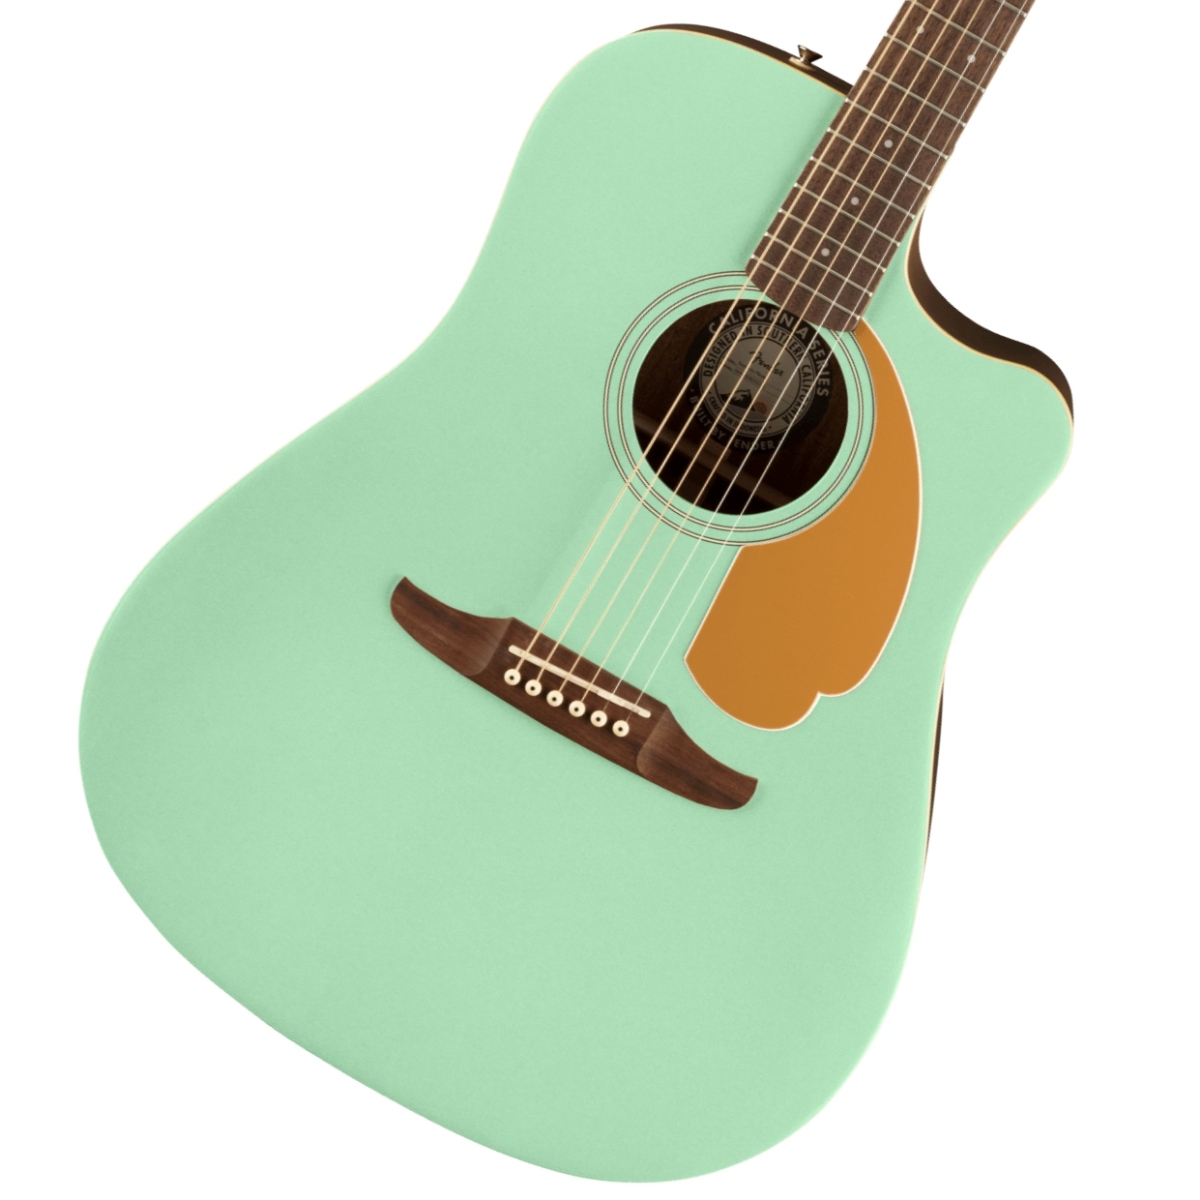 Fender エレアコ redondo アコースティックギター